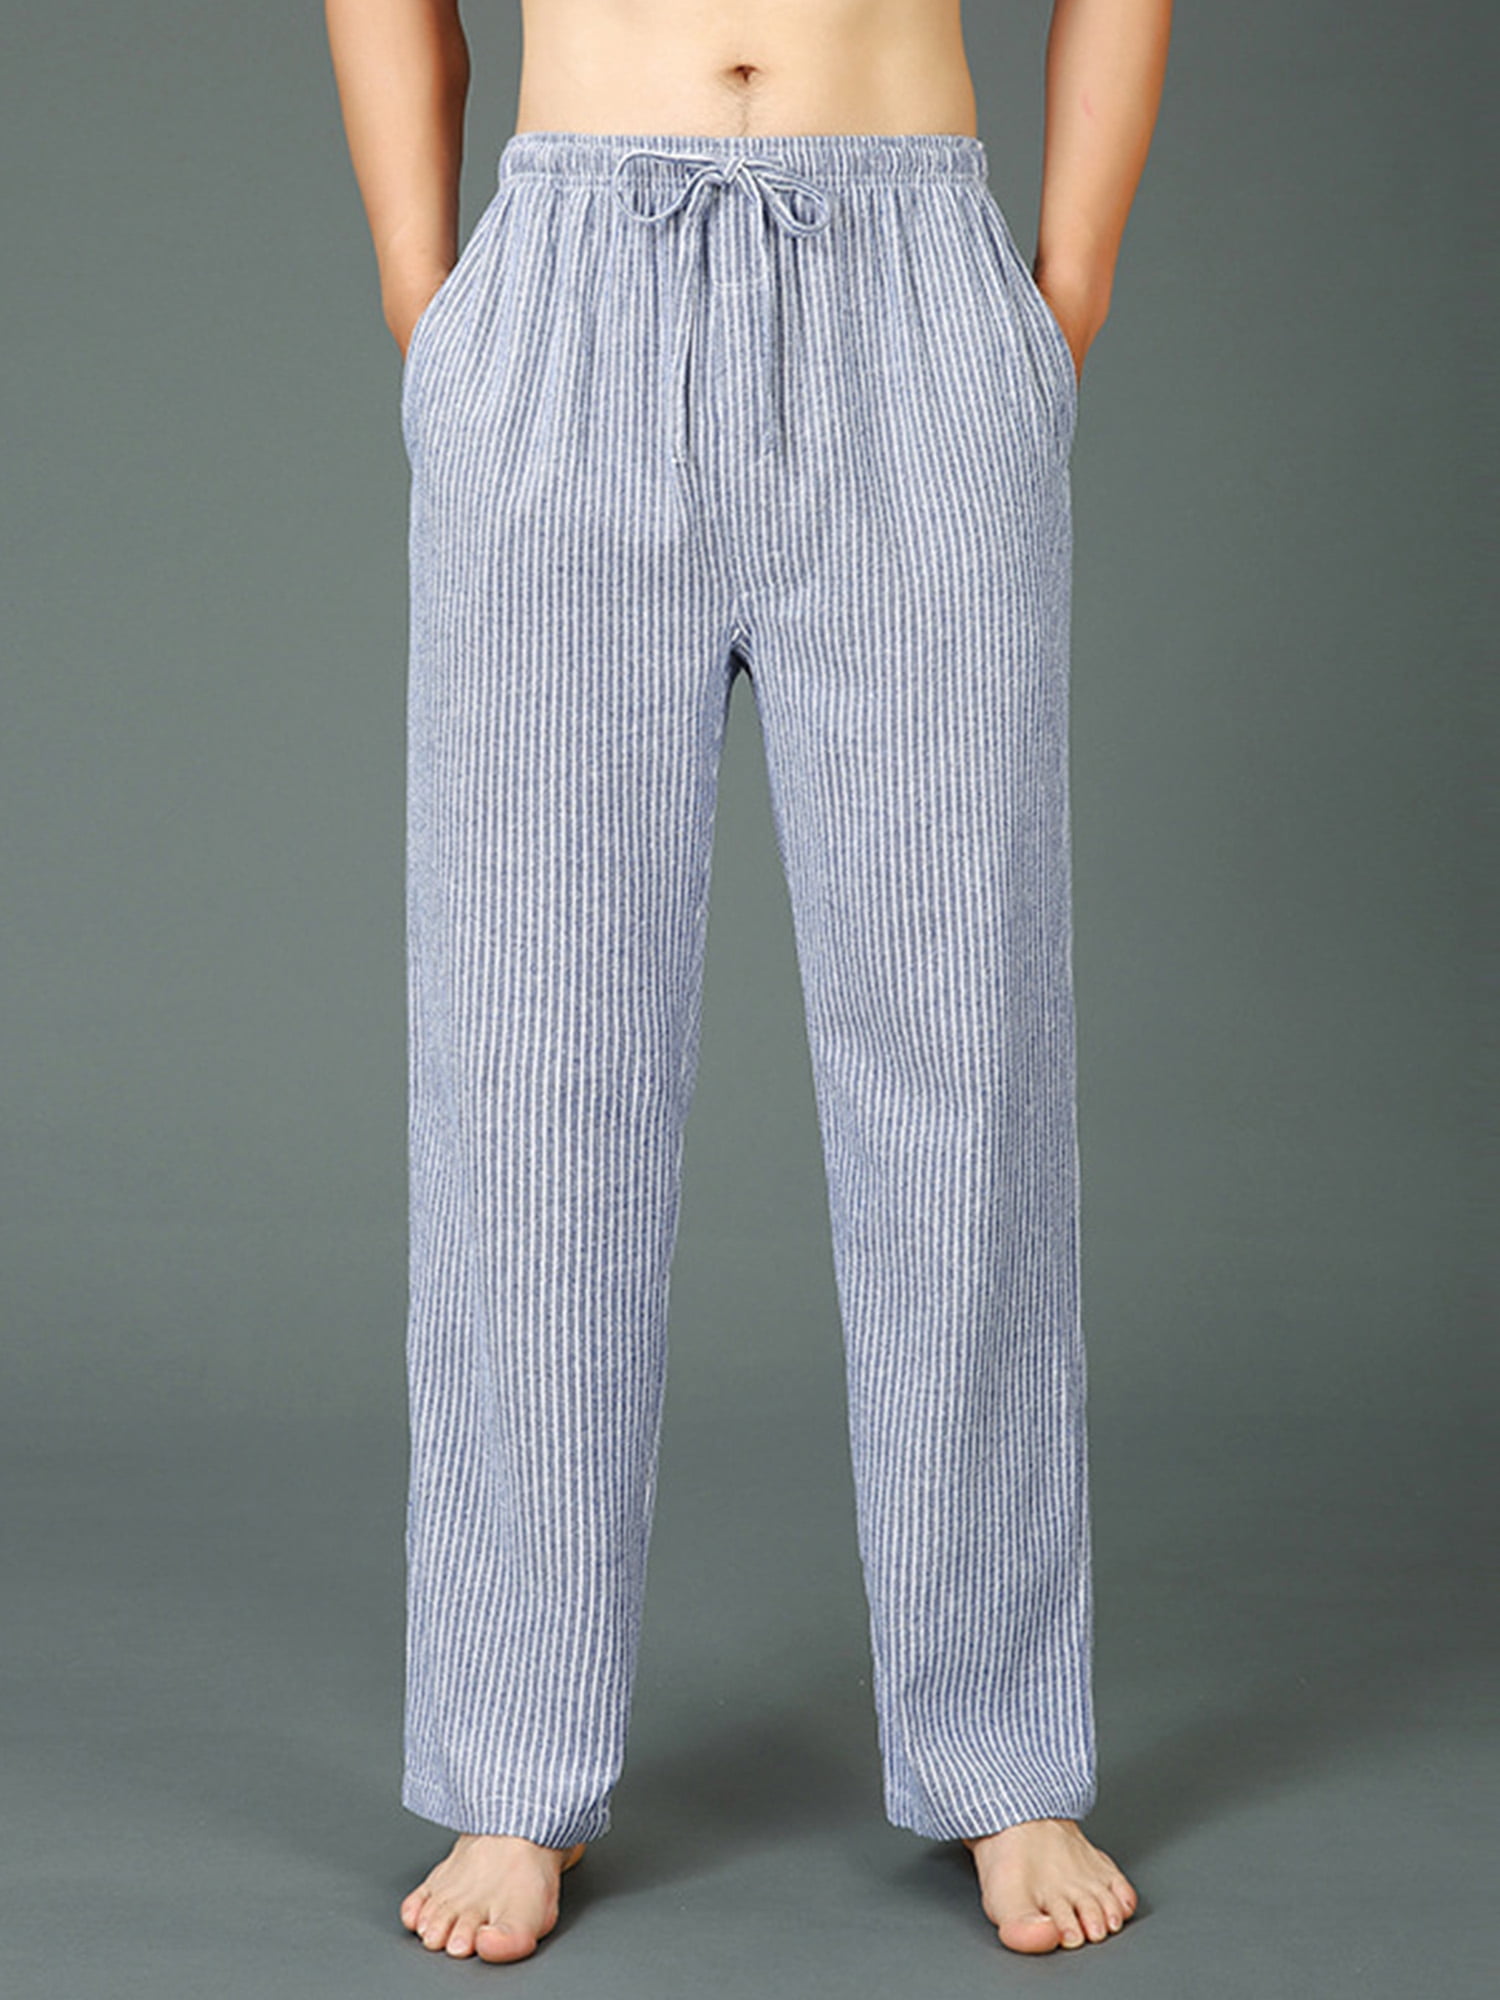 SIORO Flannel Pajama Pants for Men Soft Cotton Plaid Sleepwear Loungewear Bottoms 